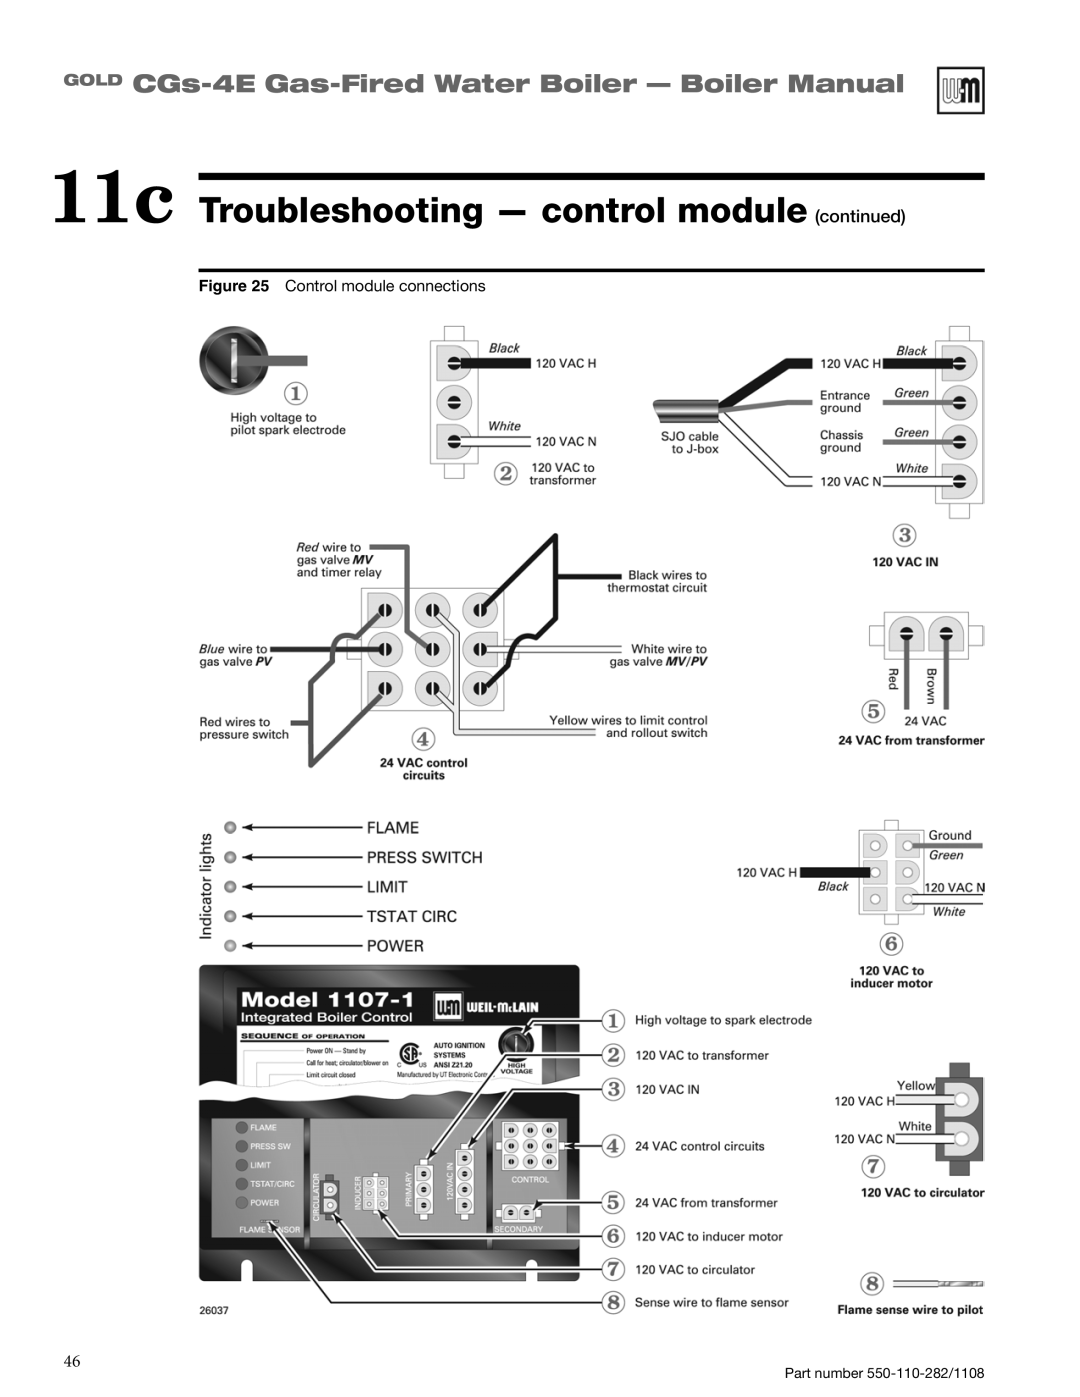 Weil-McLain CGS-4E manual 11c Troubleshooting - control module continued, GOLD CGs-4E Gas-FiredWater Boiler - Boiler Manual 